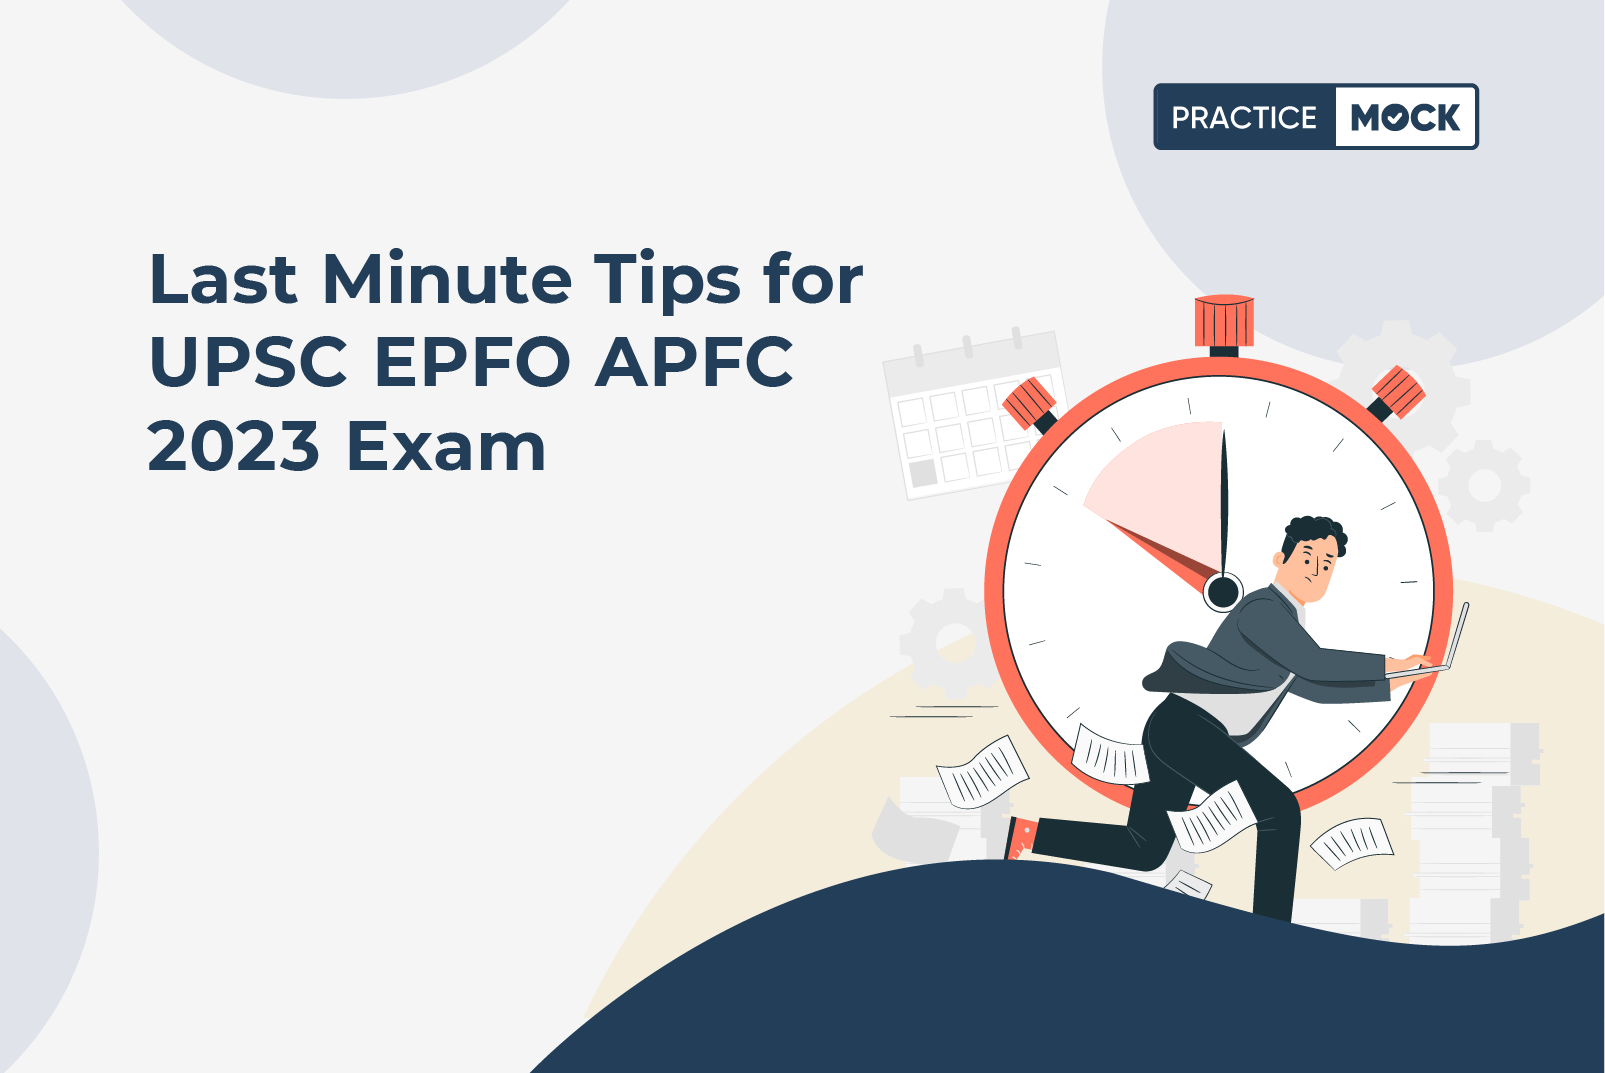 Last Minute Tips for UPSC EPFO APFC 2023 Exam